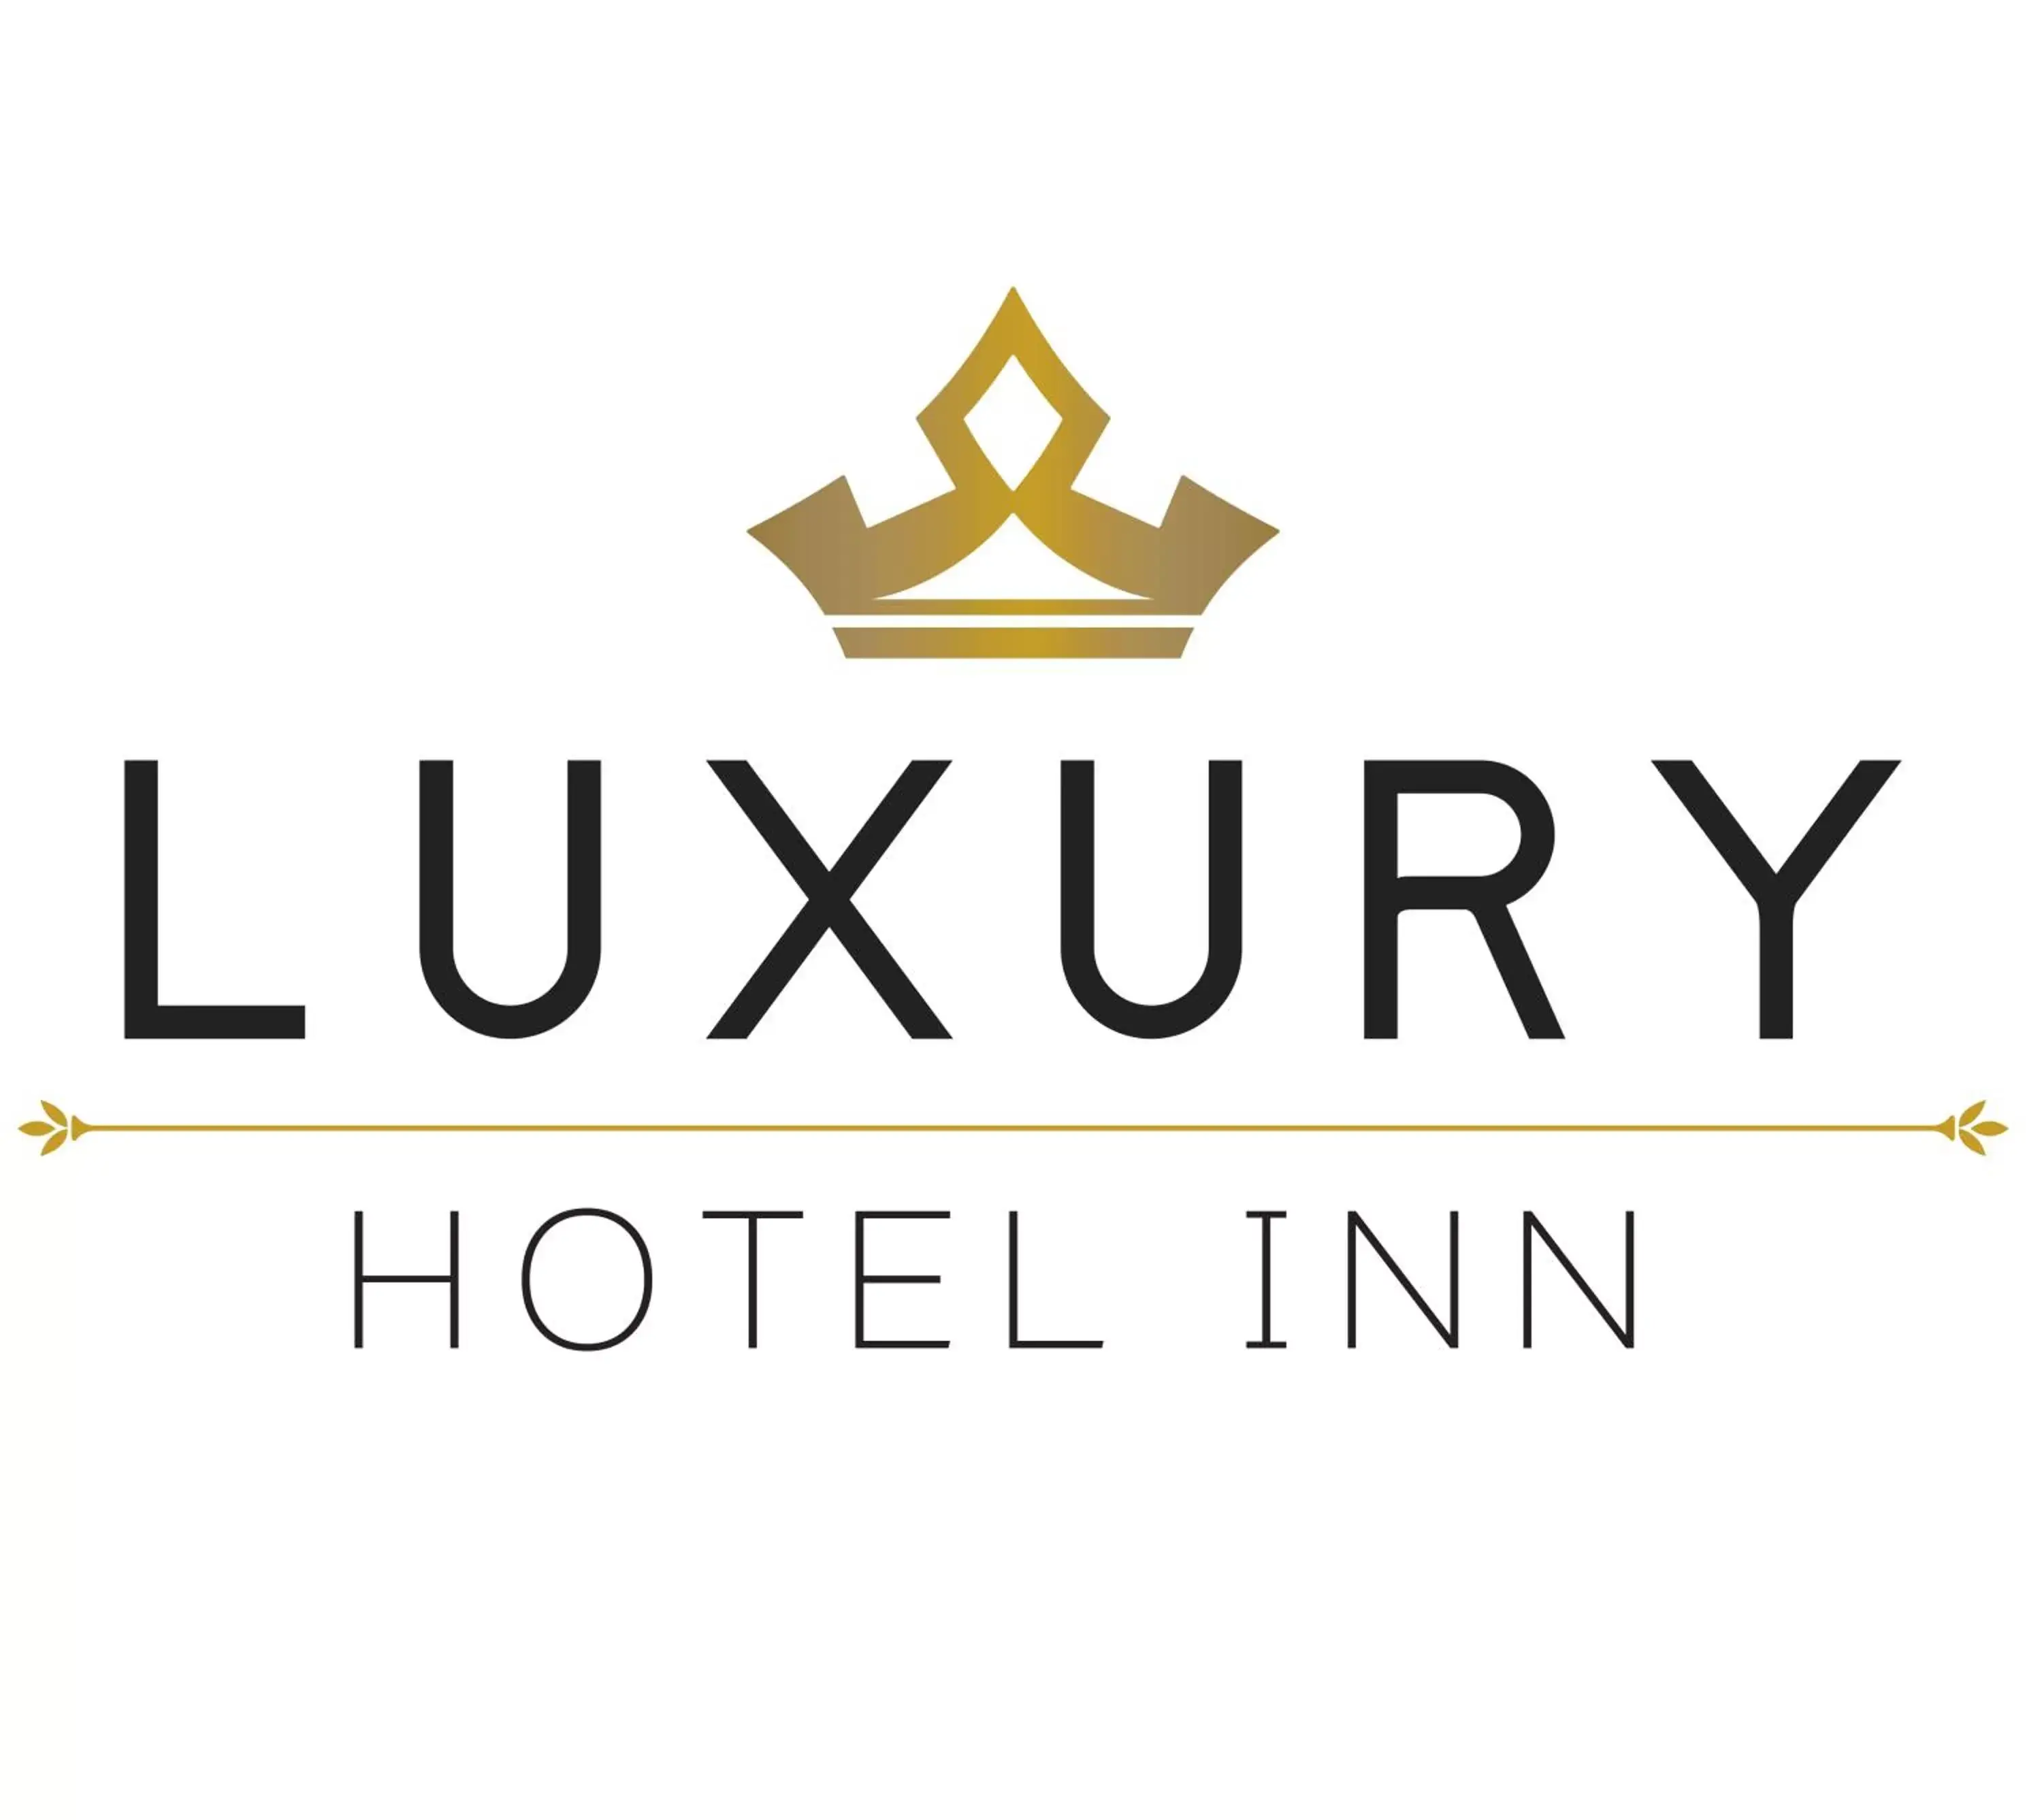 Property logo or sign in Luxury Hotel Inn